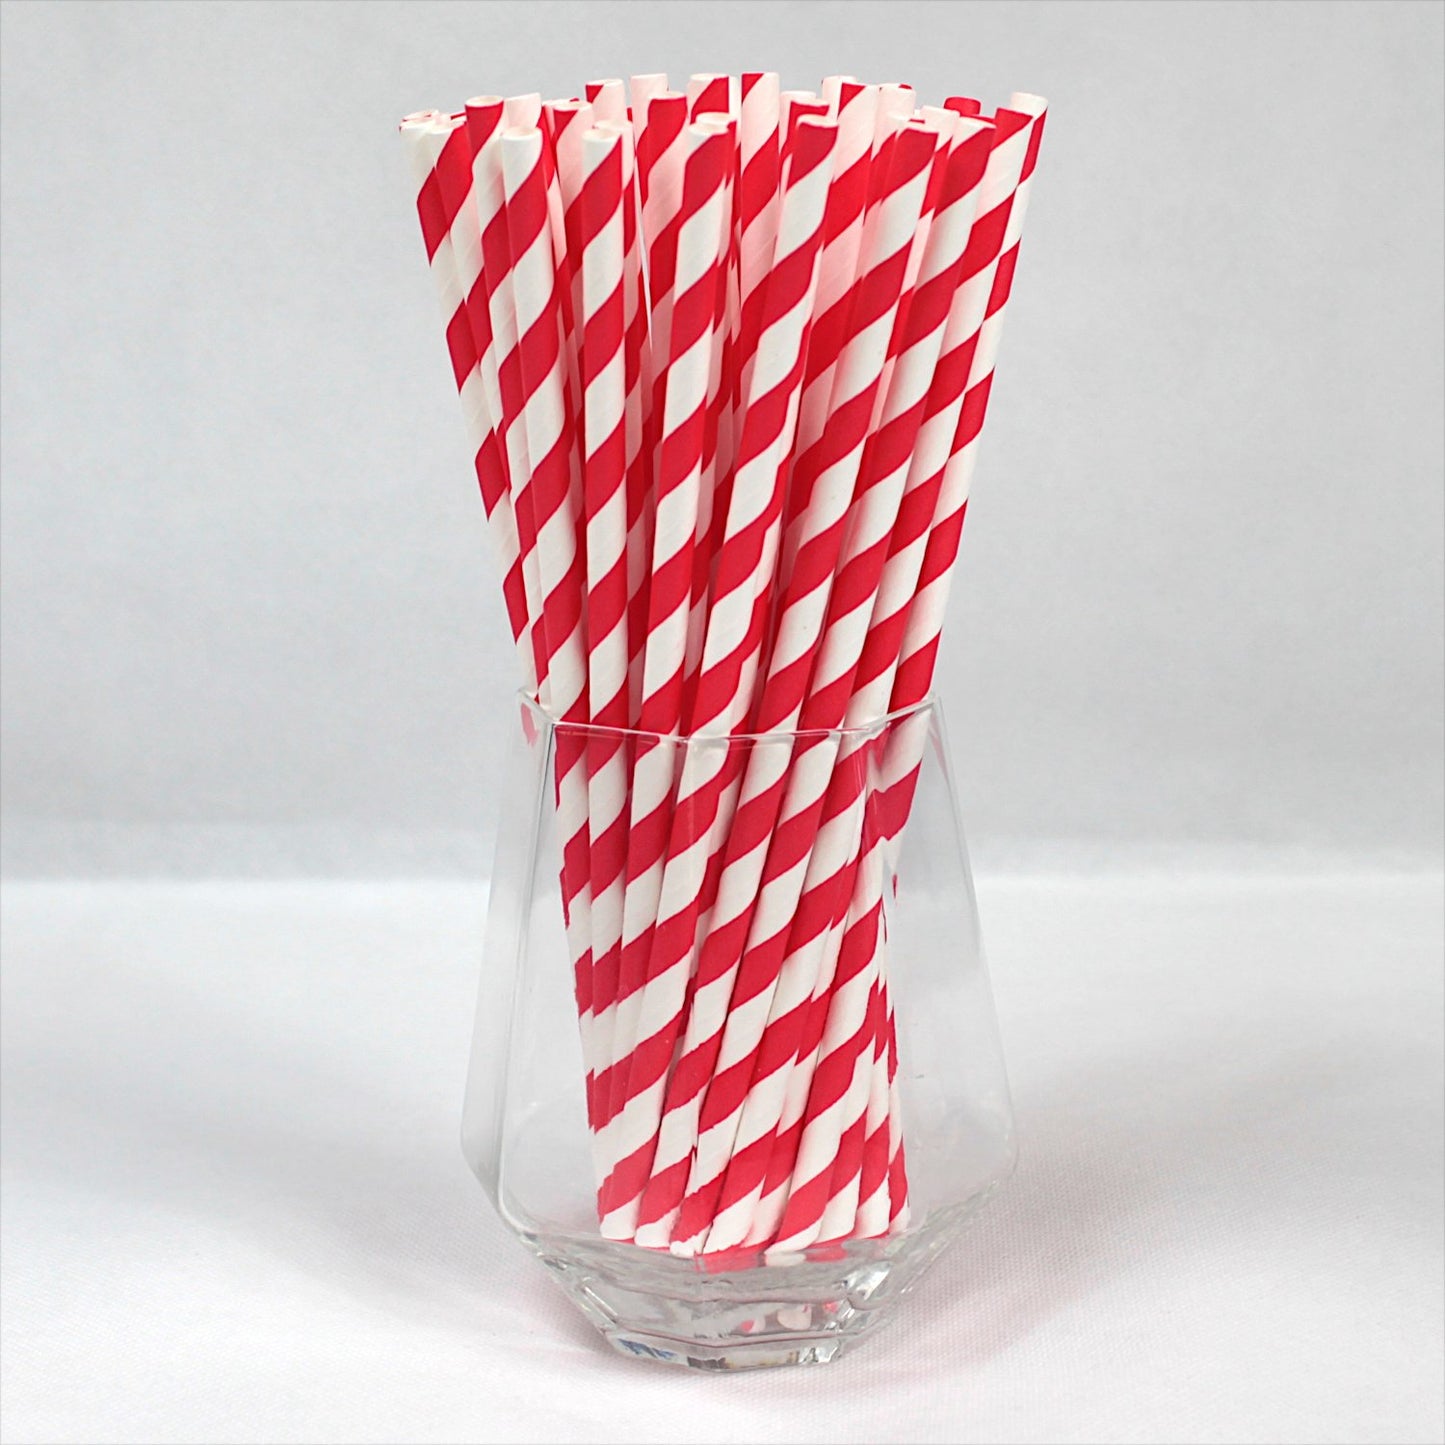 Bright Red & White Striped Paper Straws (6mm x 200mm) - Quality Drinking Straws - Intrinsic Paper Straws